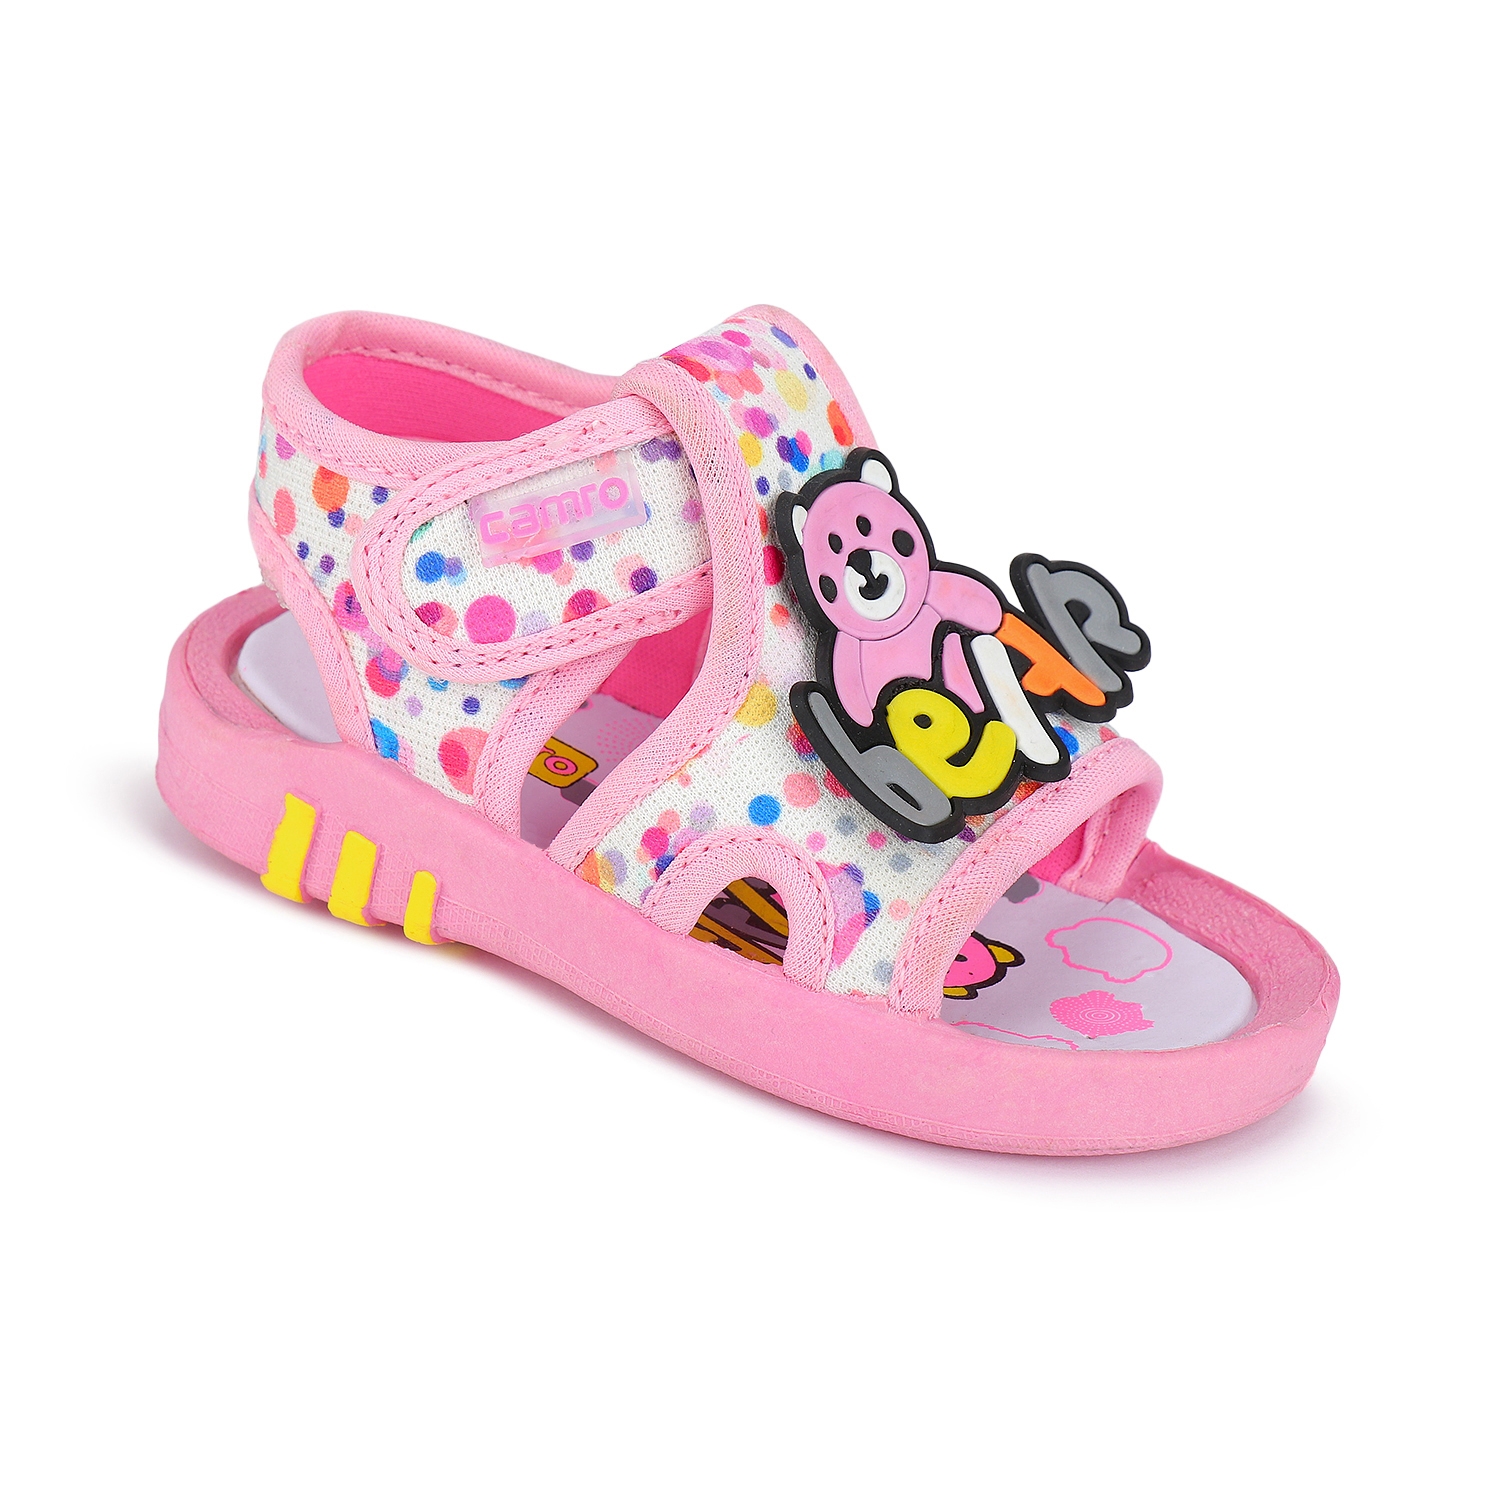 Camro Jingle 4 Pink Kiddy Sandals